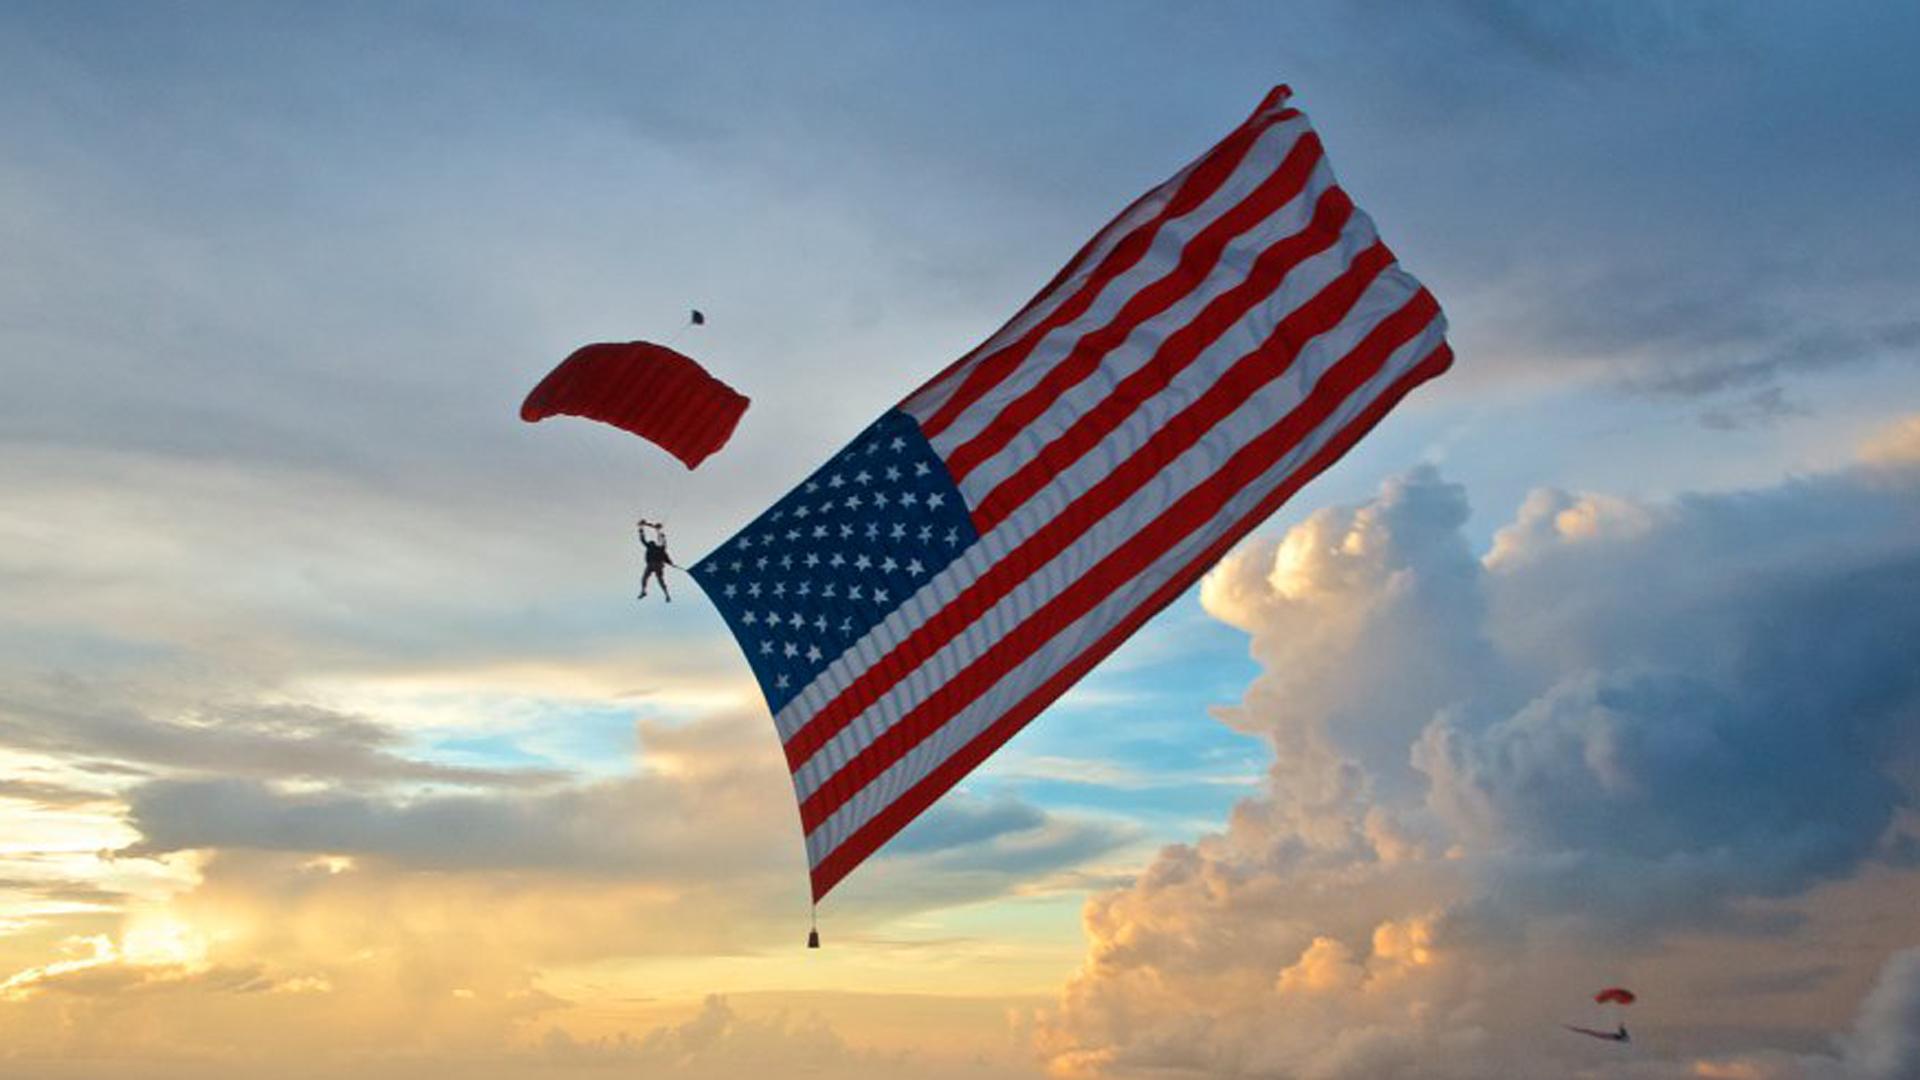 Americana Skydiving Performance photo